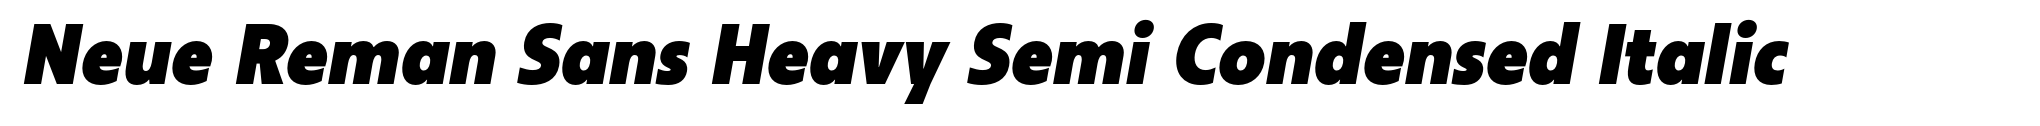 Neue Reman Sans Heavy Semi Condensed Italic image